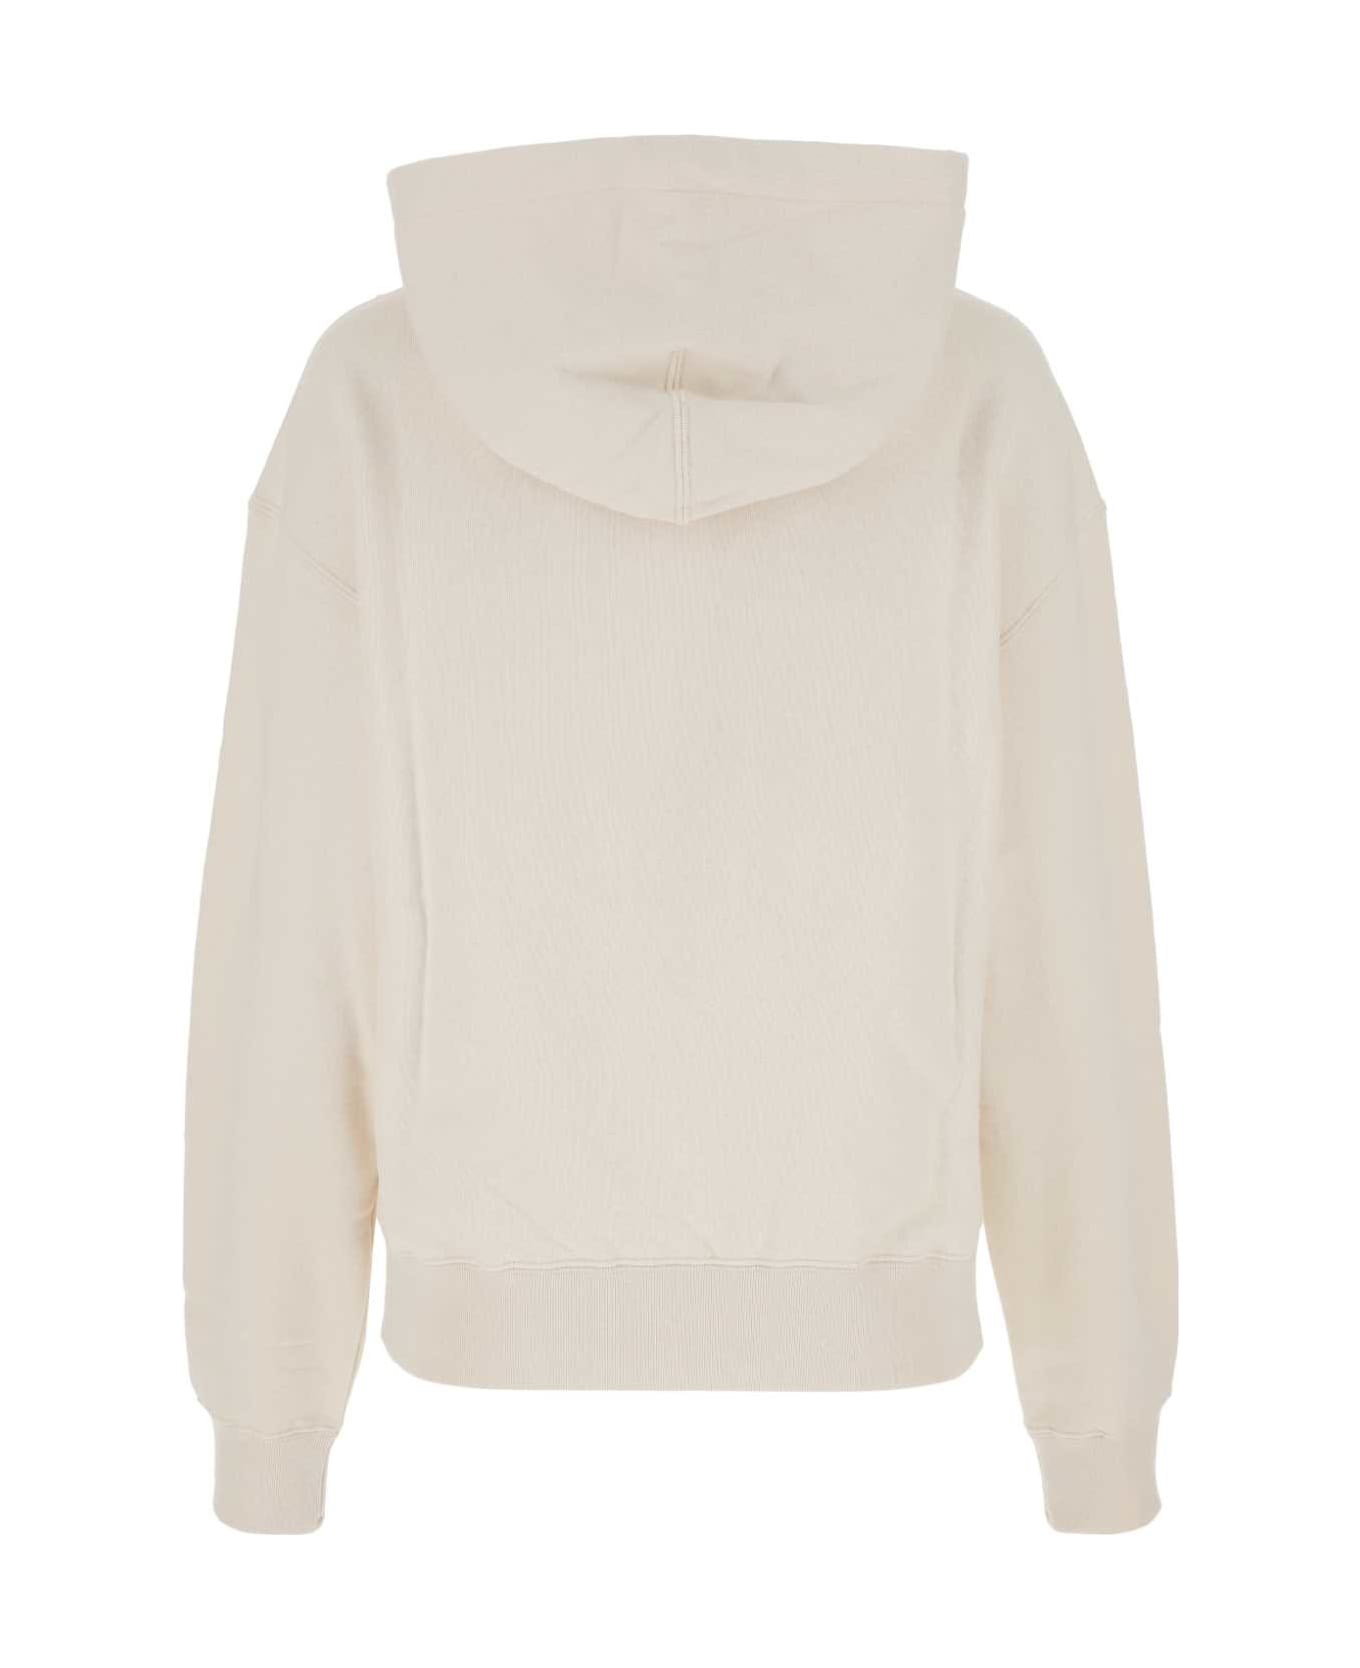 Jil Sander Cream Cotton Oversize Sweatshirt - 279